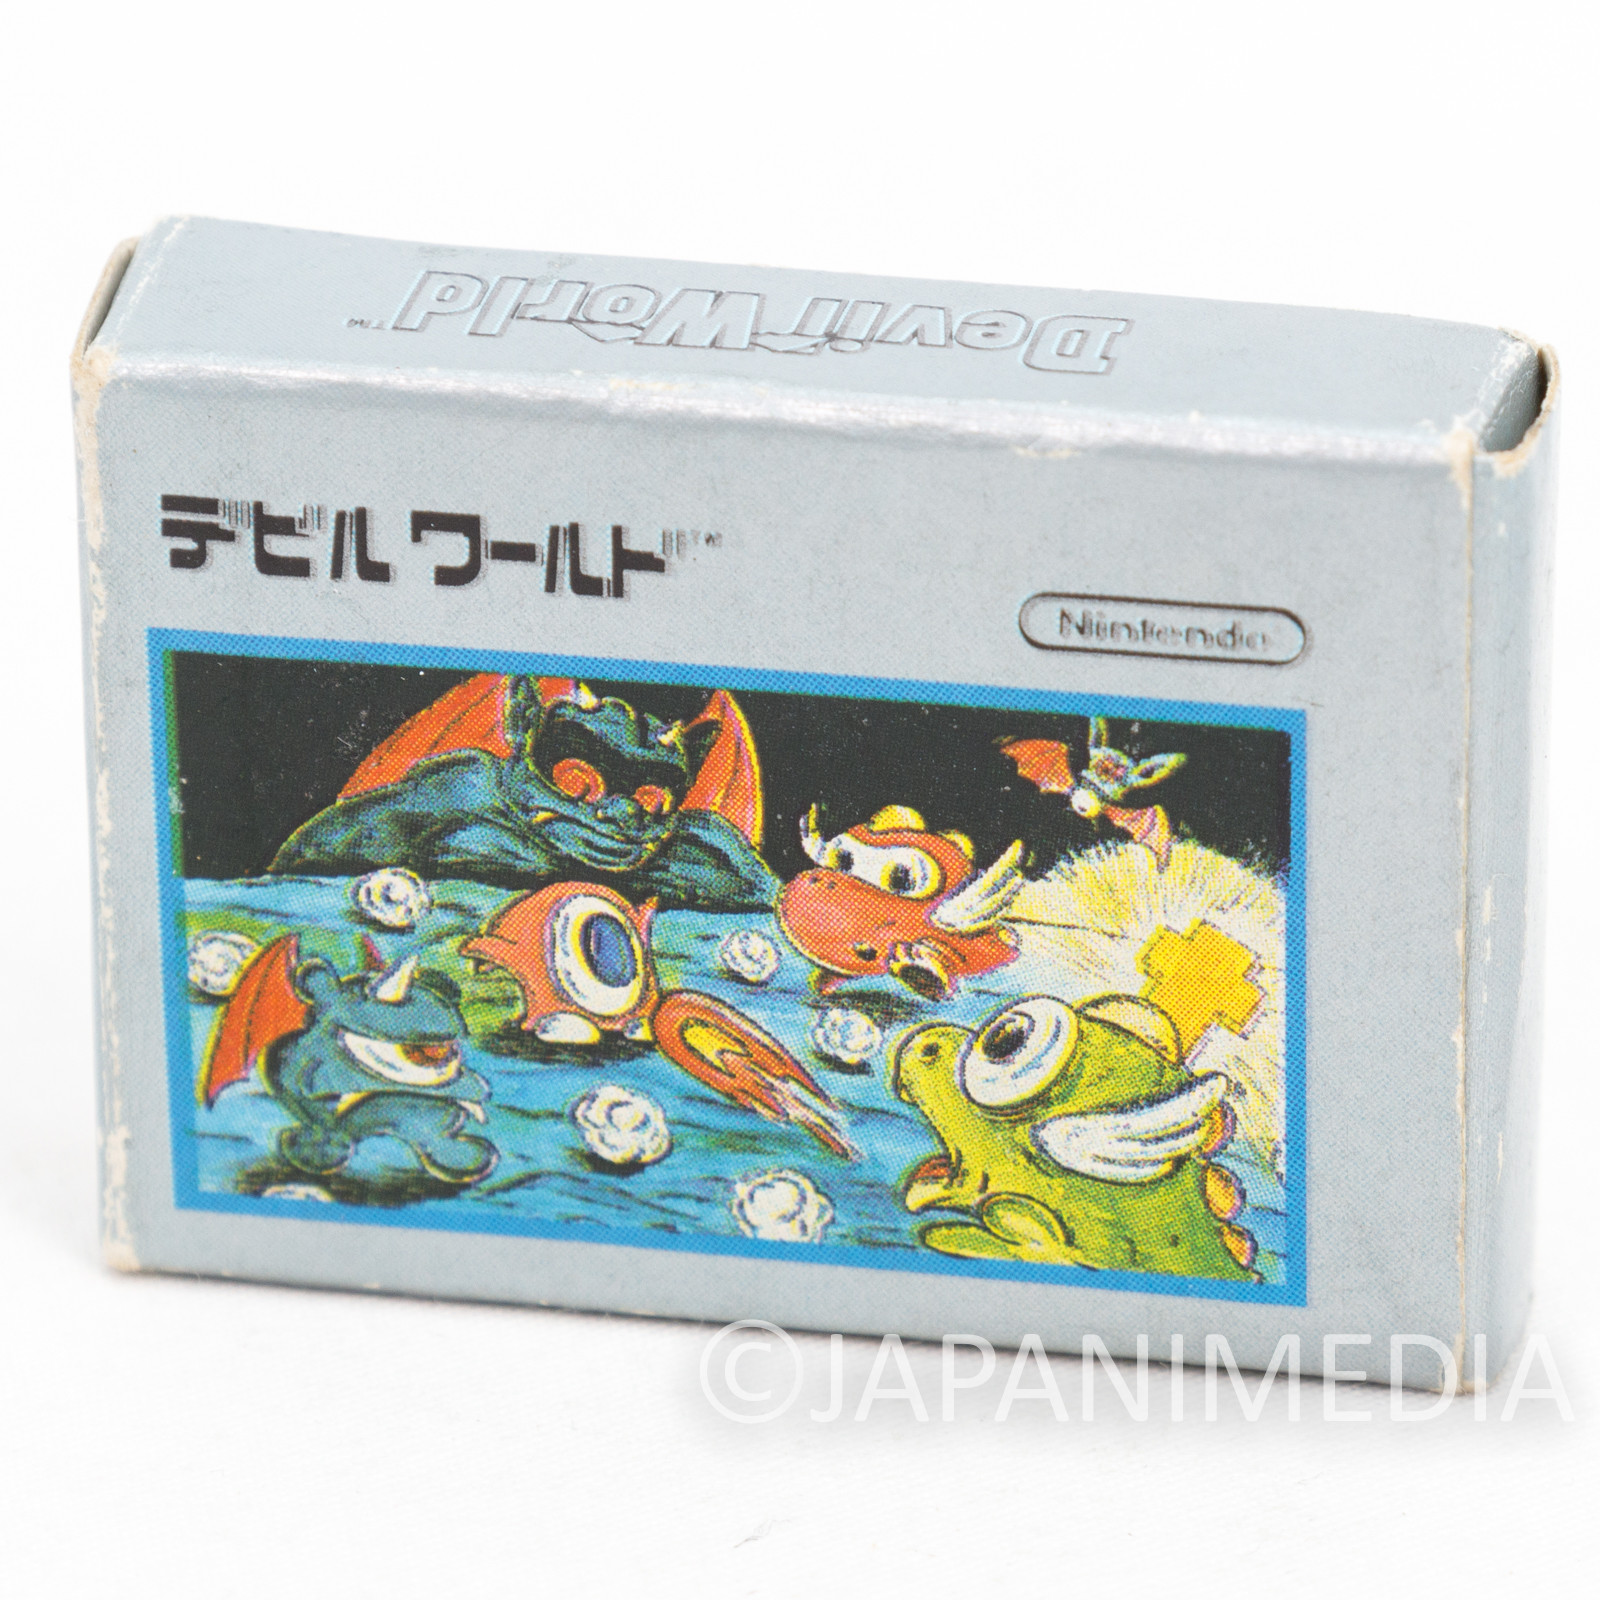 Devil World Cassette Mini Eraser AMADA JAPAN FAMICOM NES Nintendo